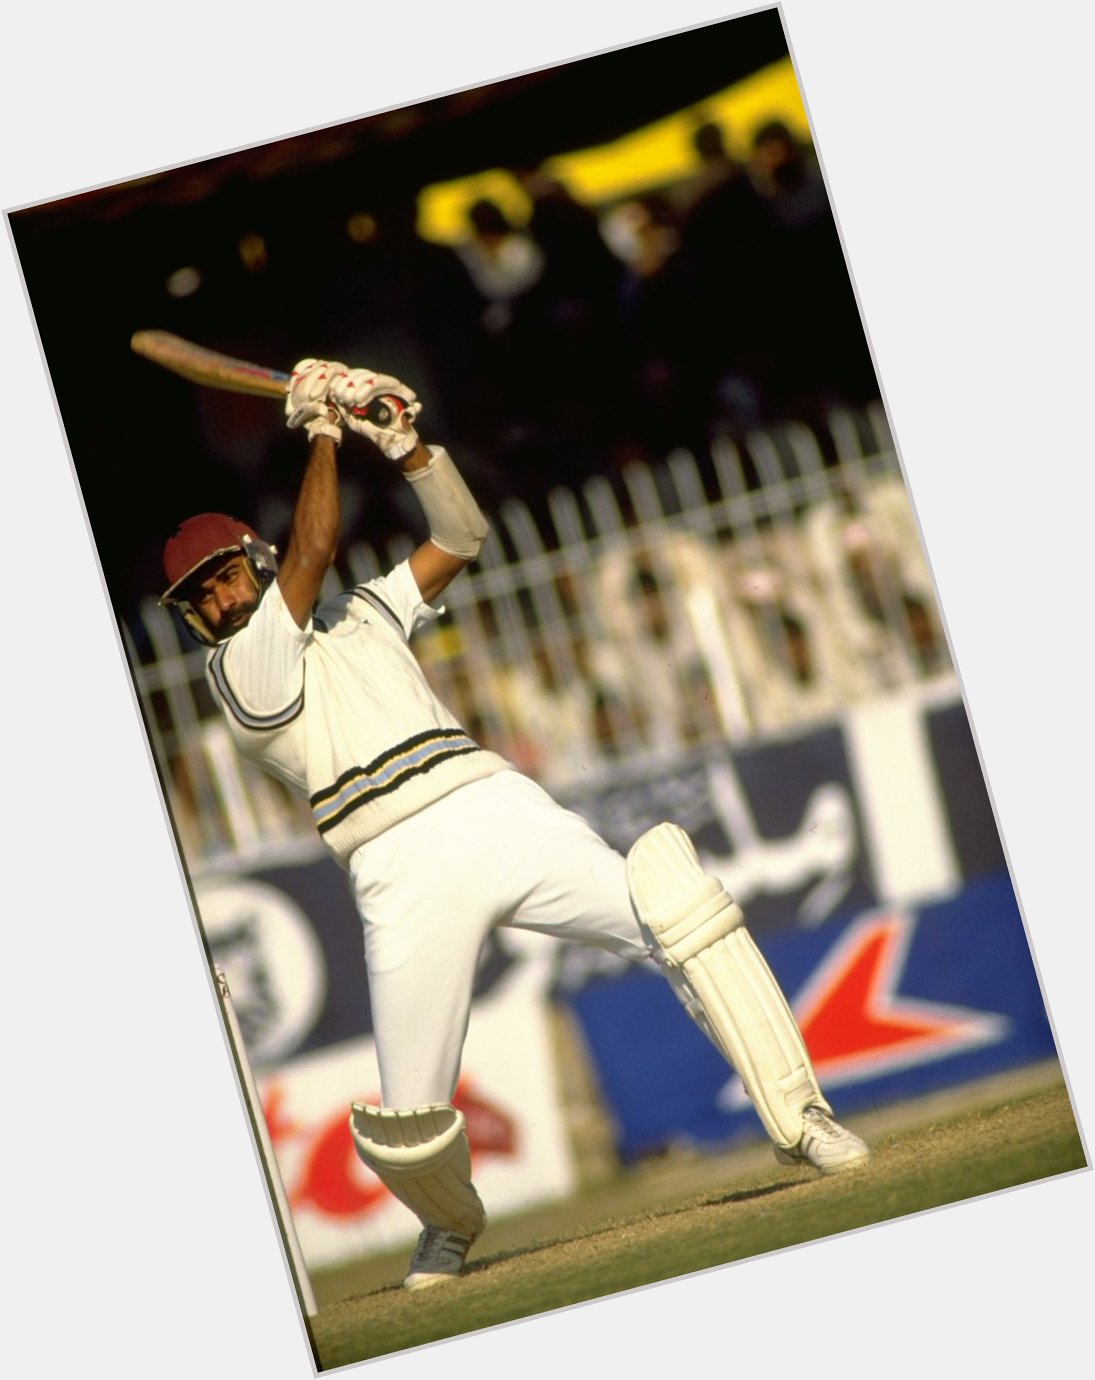 Happy birthday to a batsman who gave spinners nightmares: Navjot Singh Sidhu! 